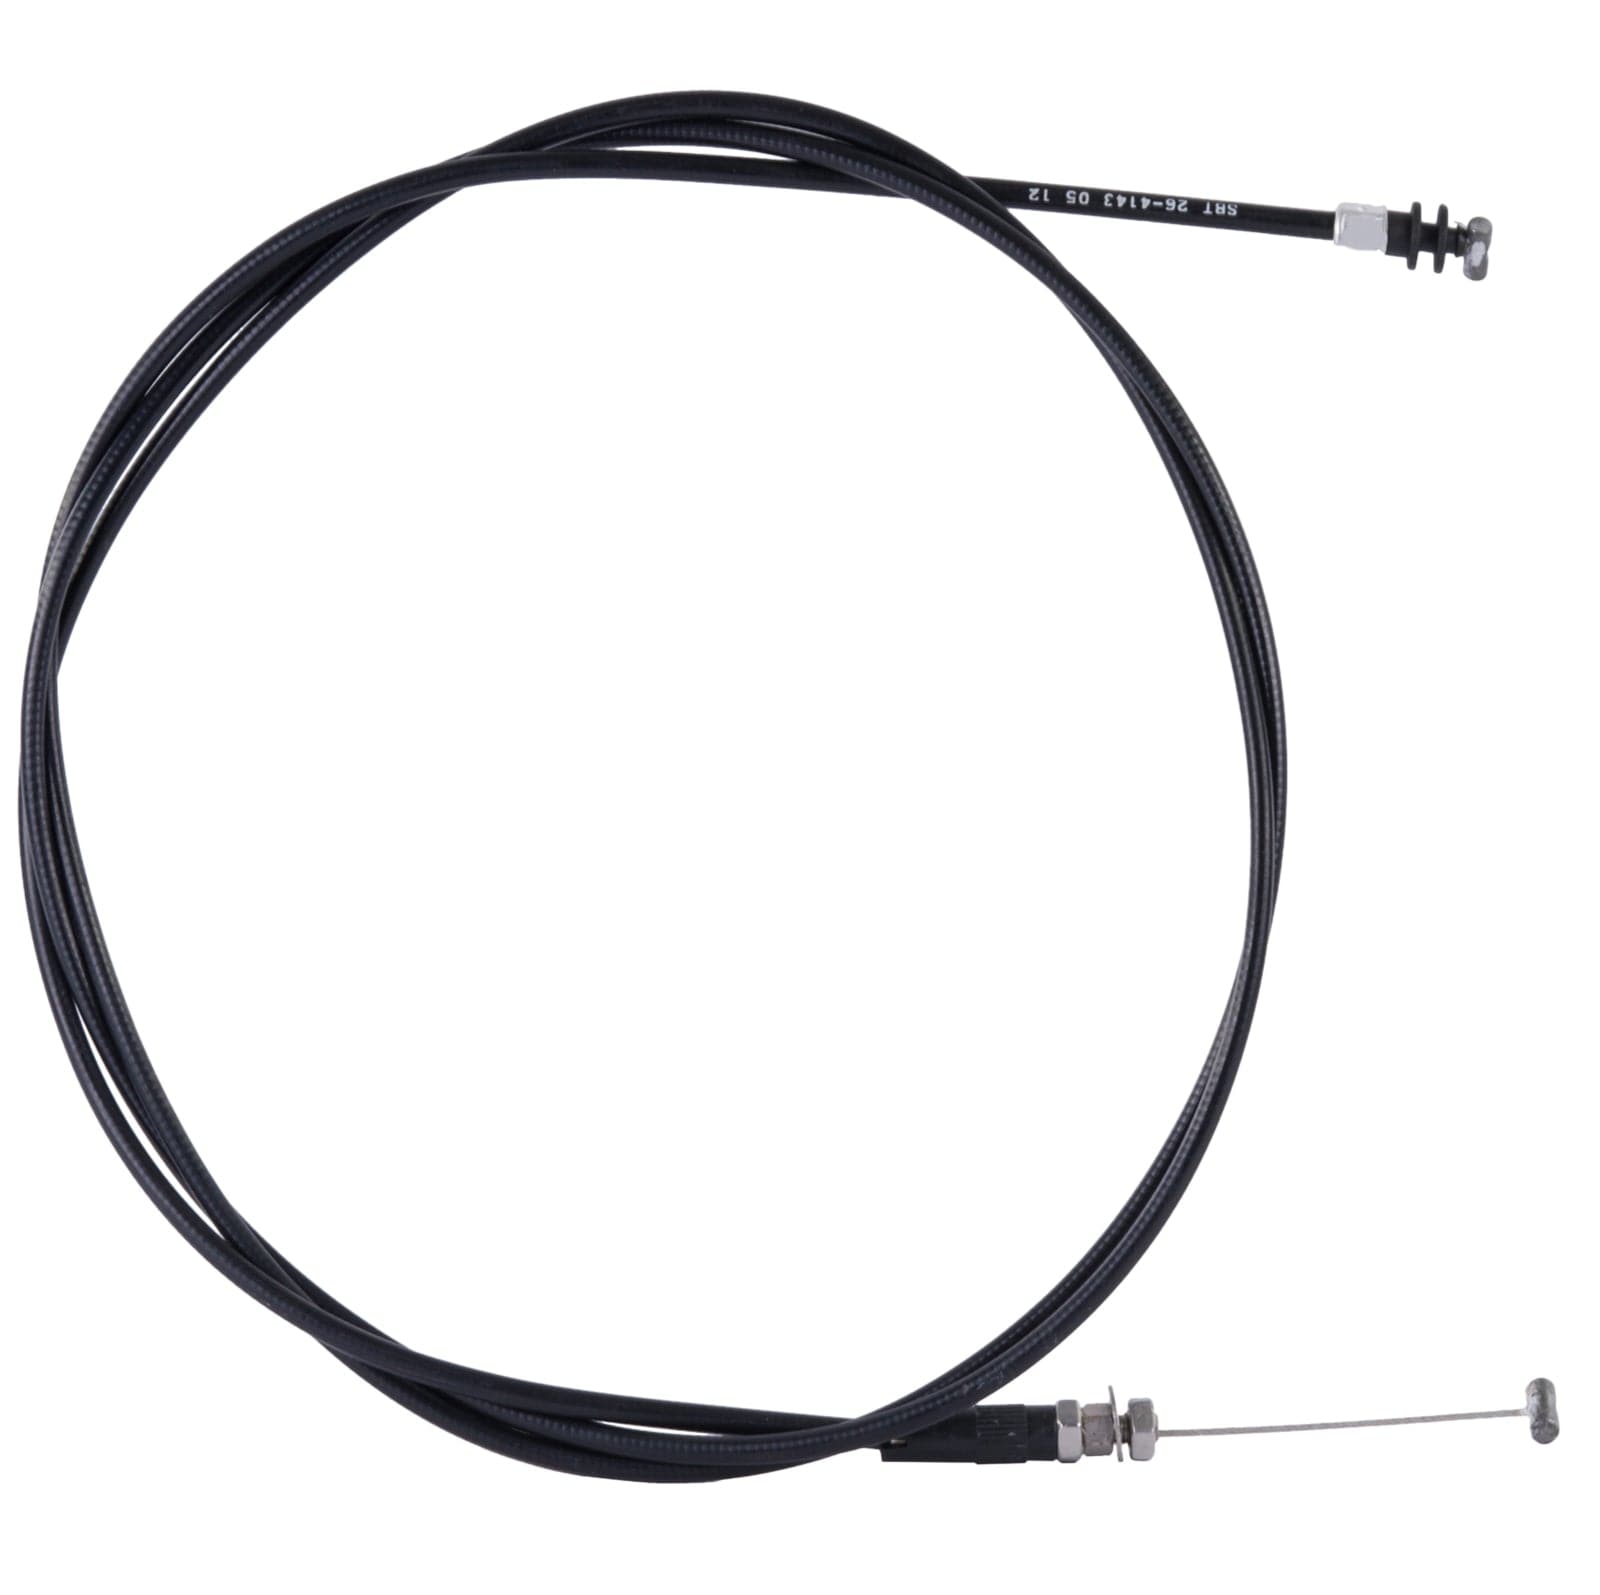 Throttle Cable for Sea-Doo RXP/RXP SC/RXP BVIC/RXP 215 HP 277001070 2004